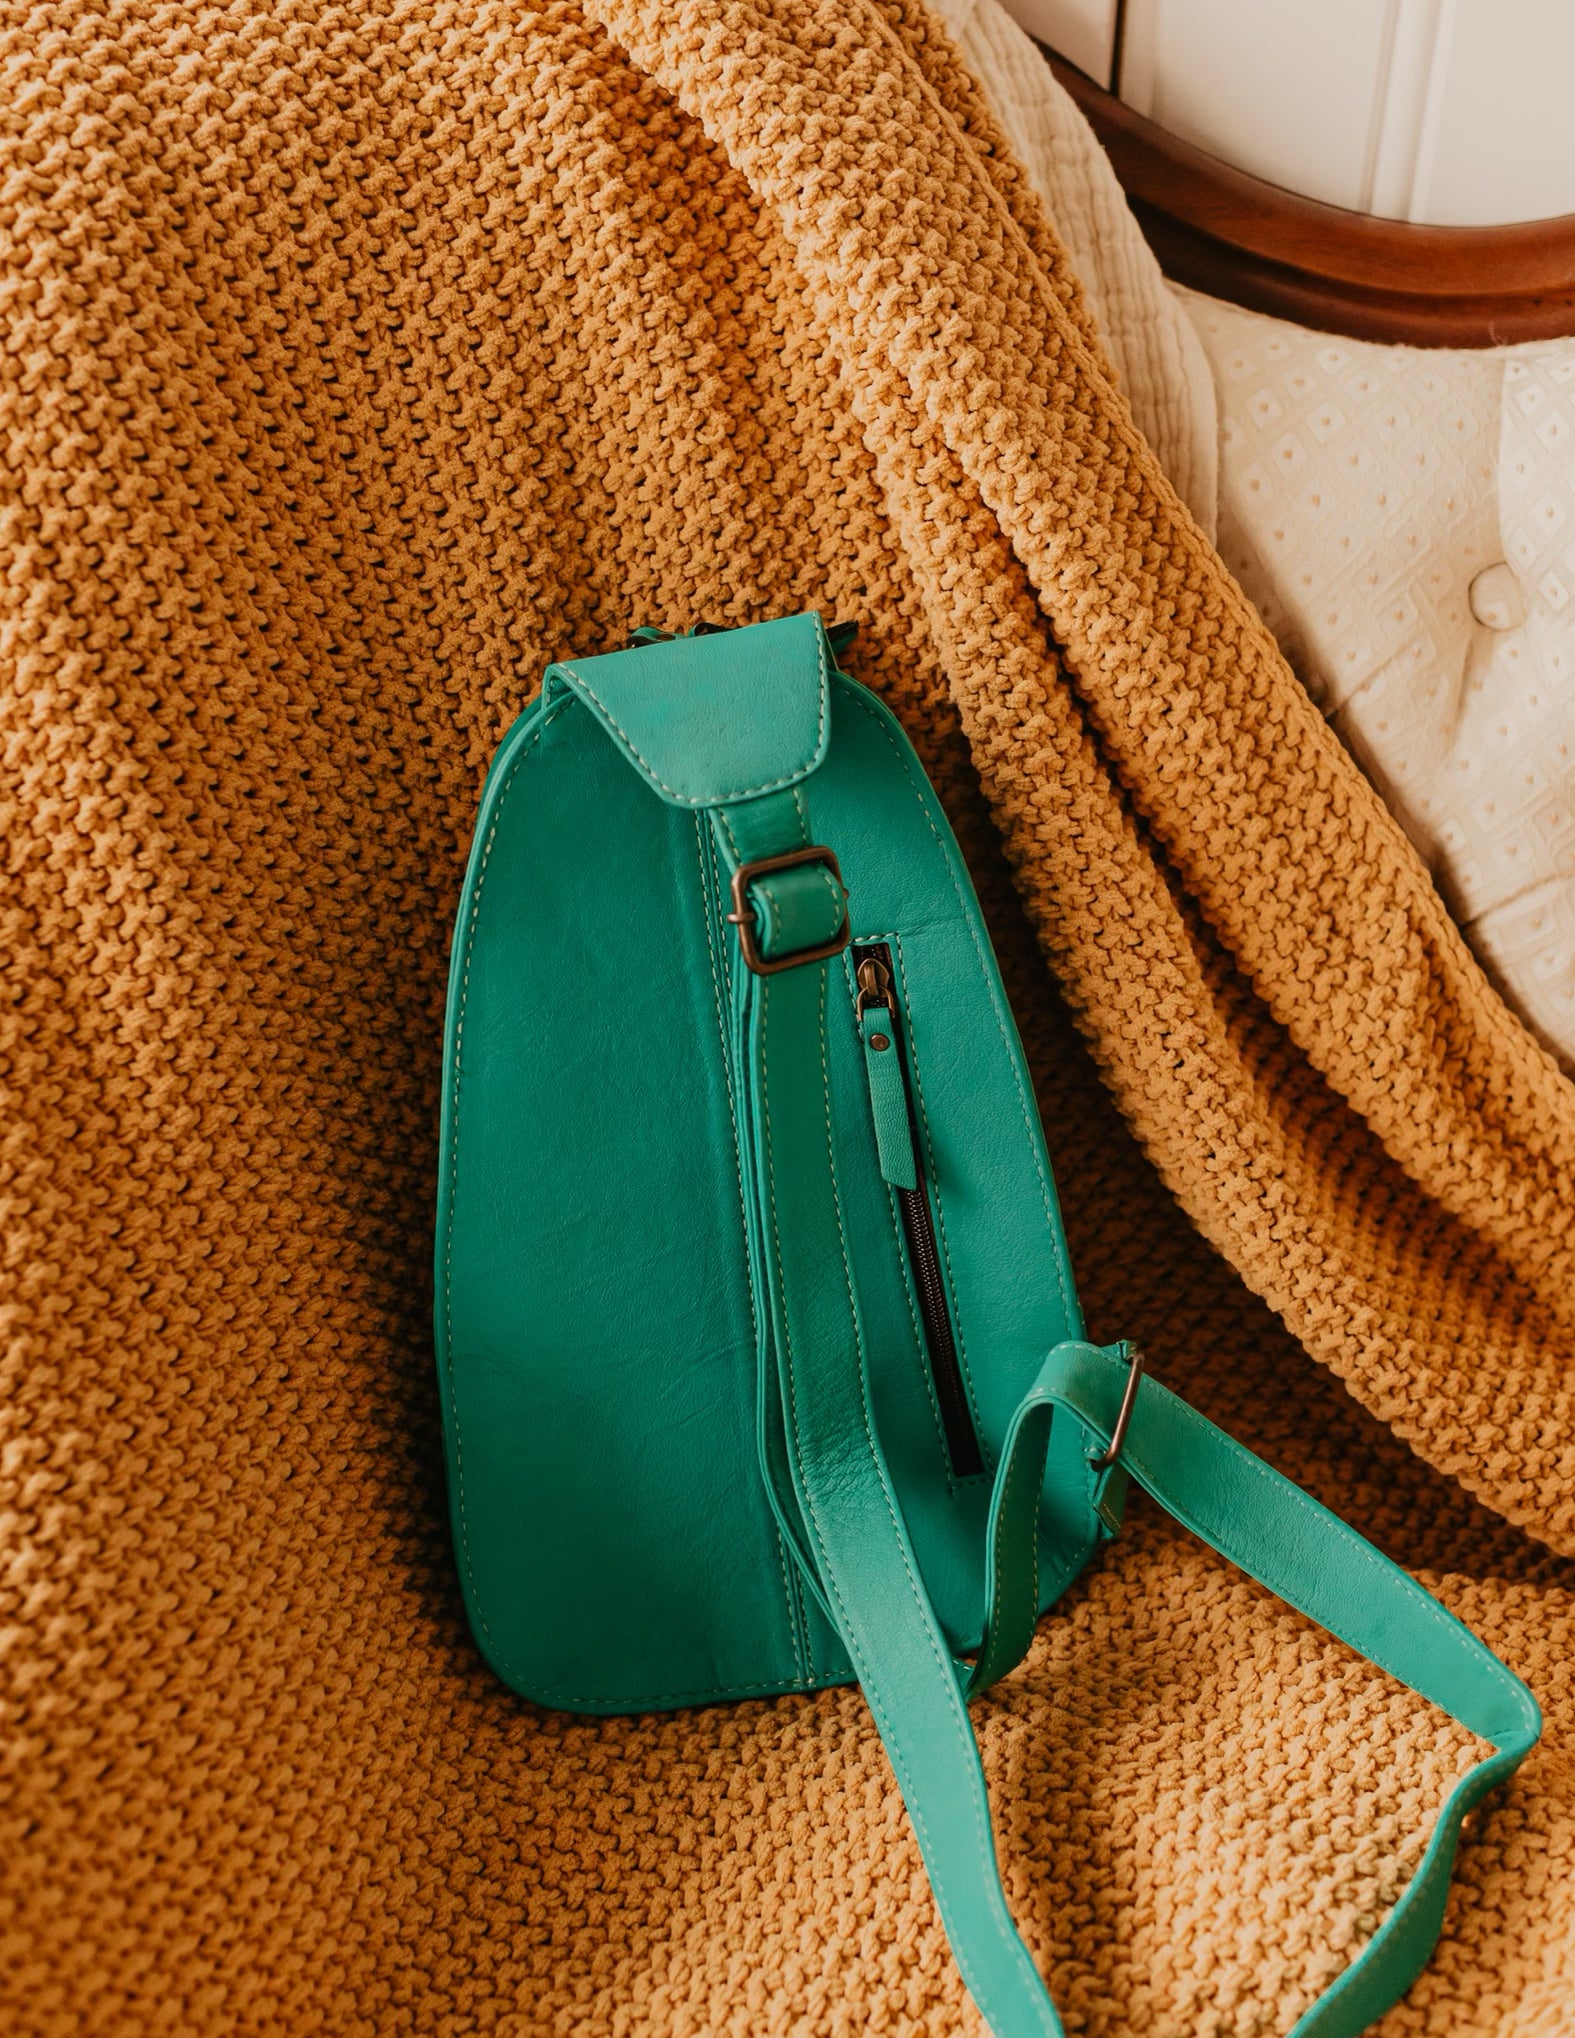 The Melleville Turquoise Sling Bag